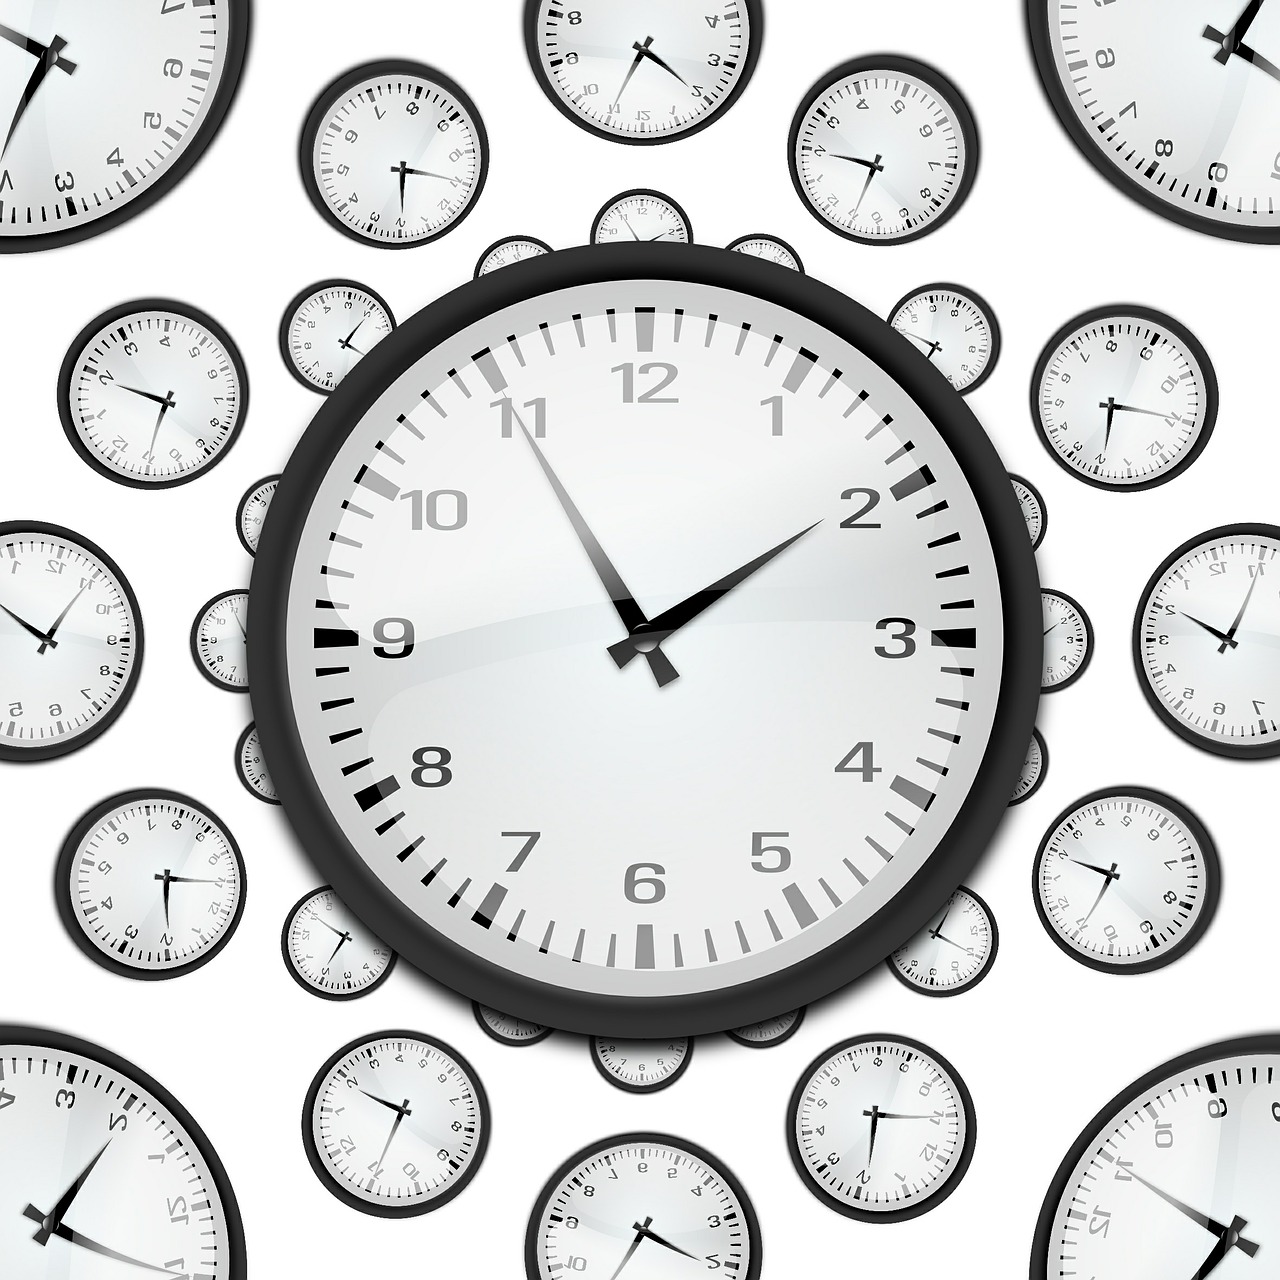 https://pixabay.com/en/time-time-indicating-agreement-date-430625/